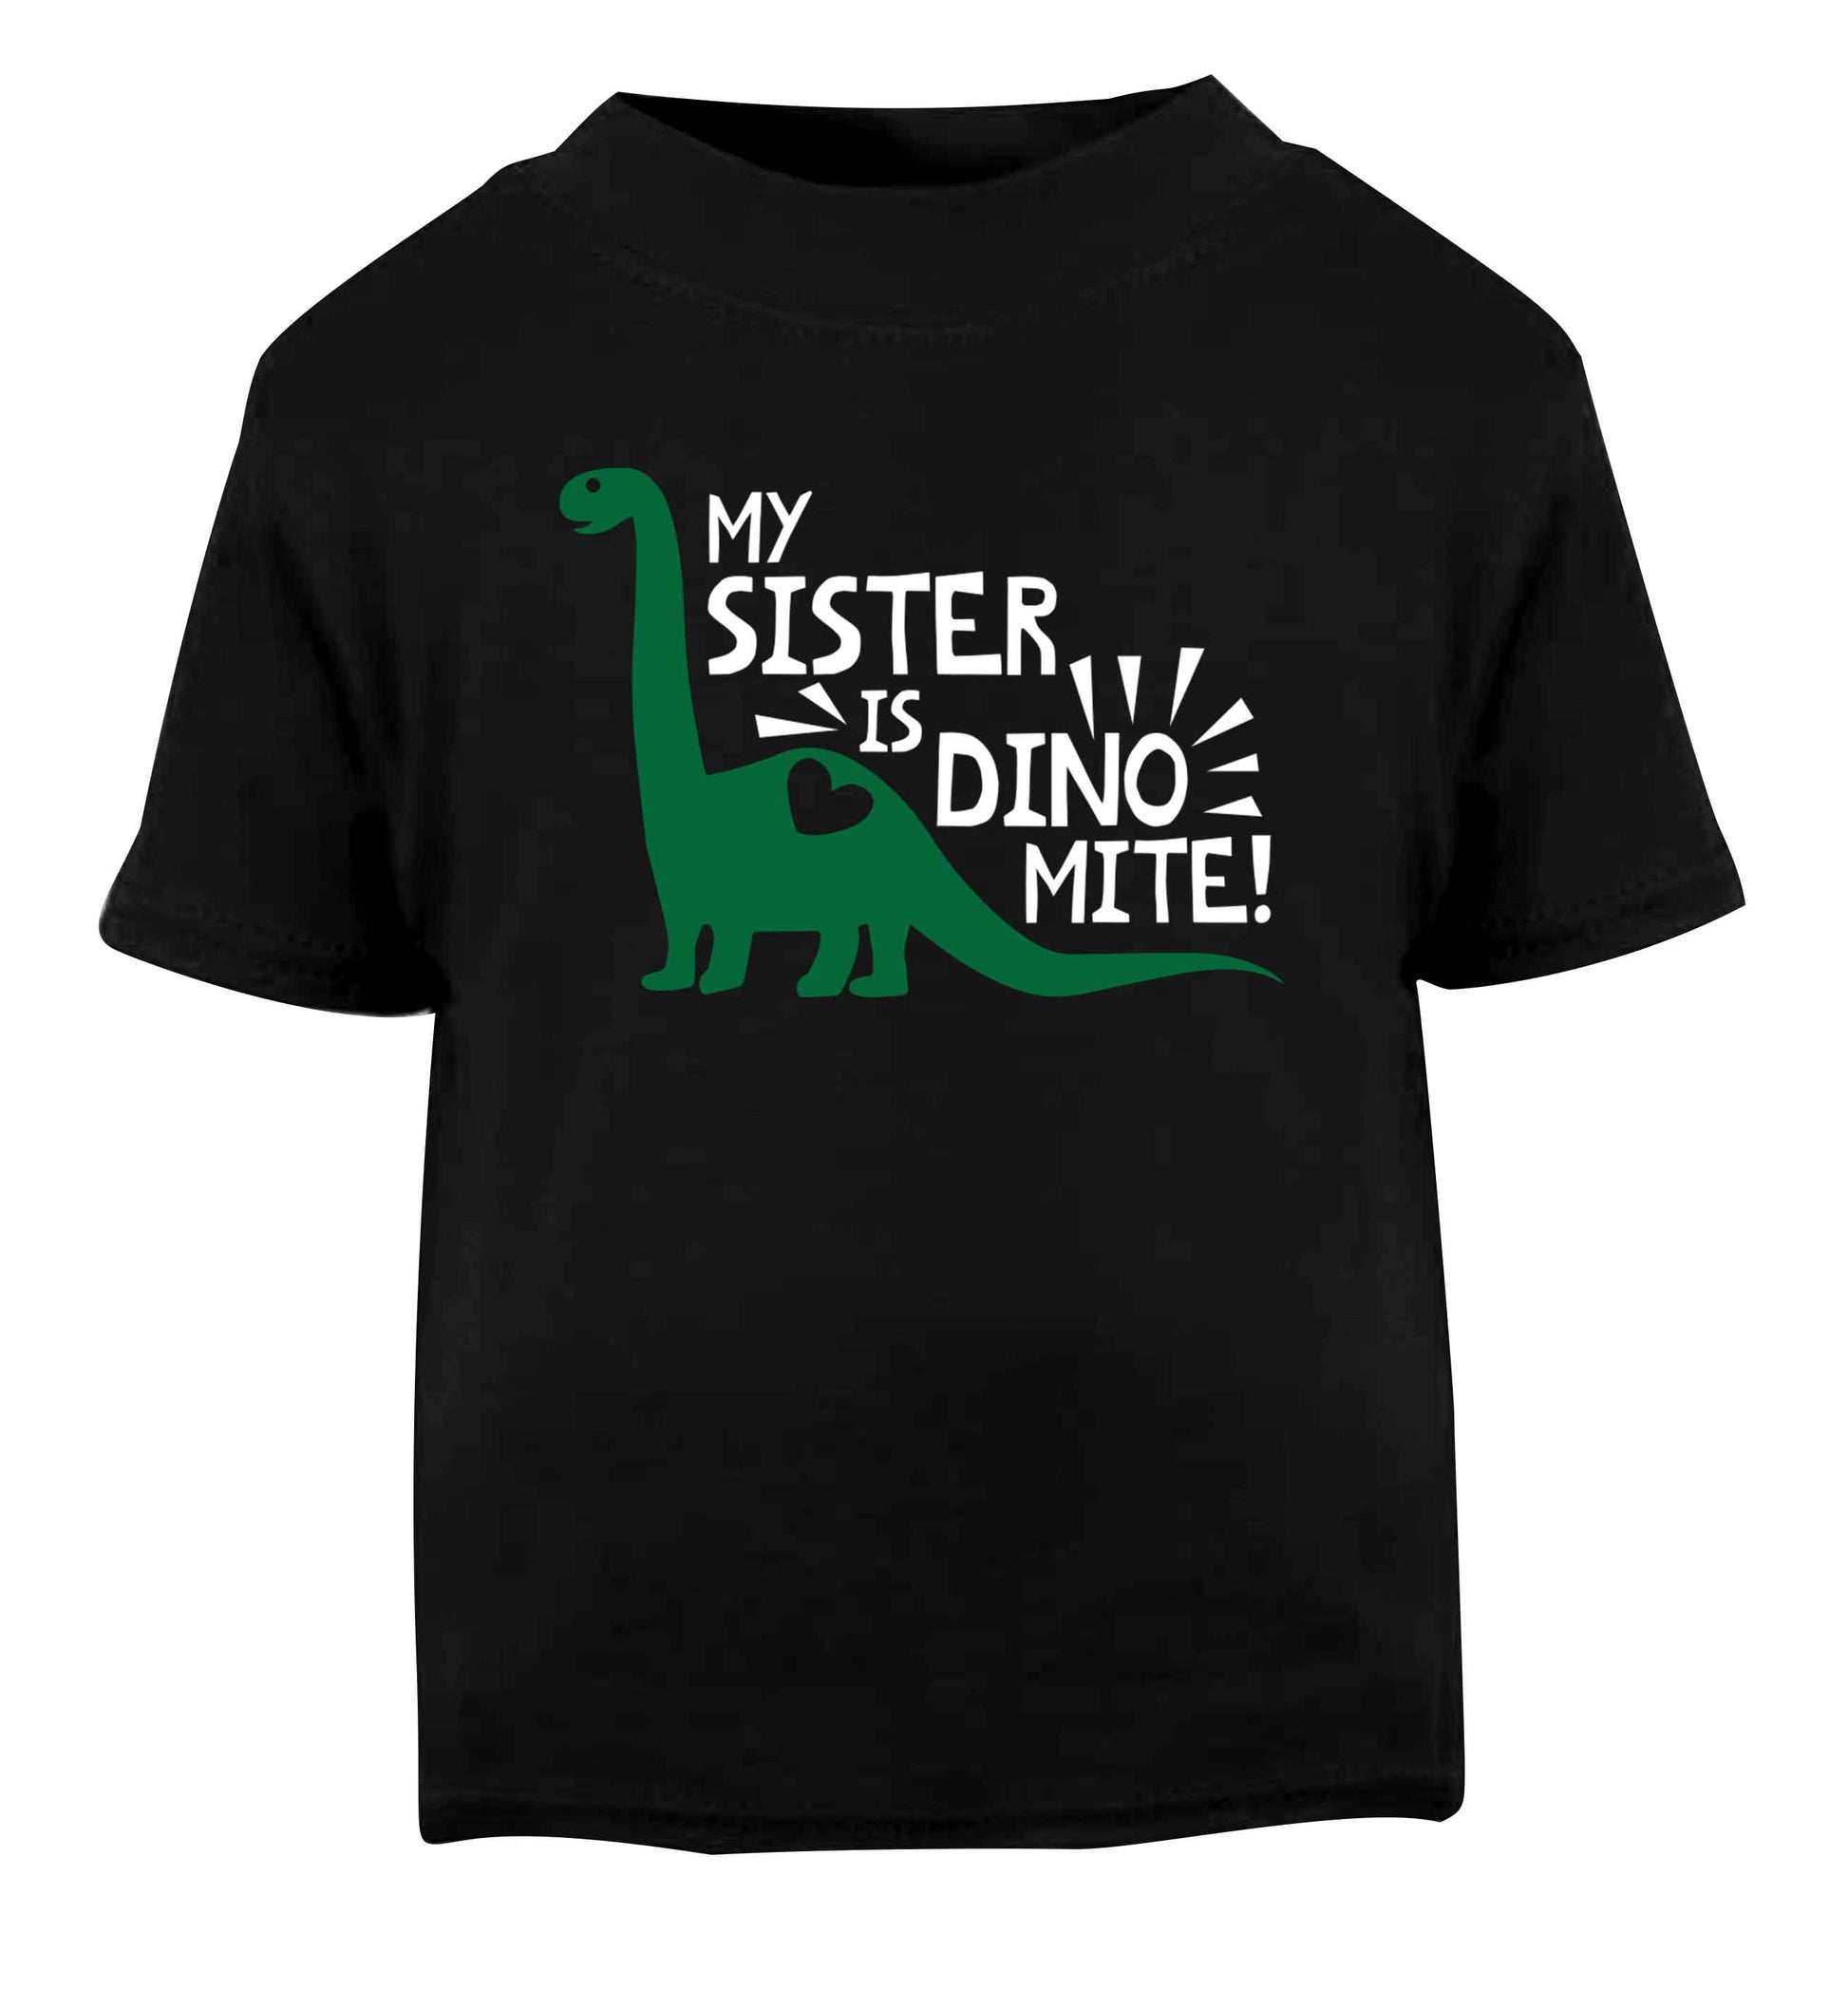 My sister is dinomite! Black Baby Toddler Tshirt 2 years